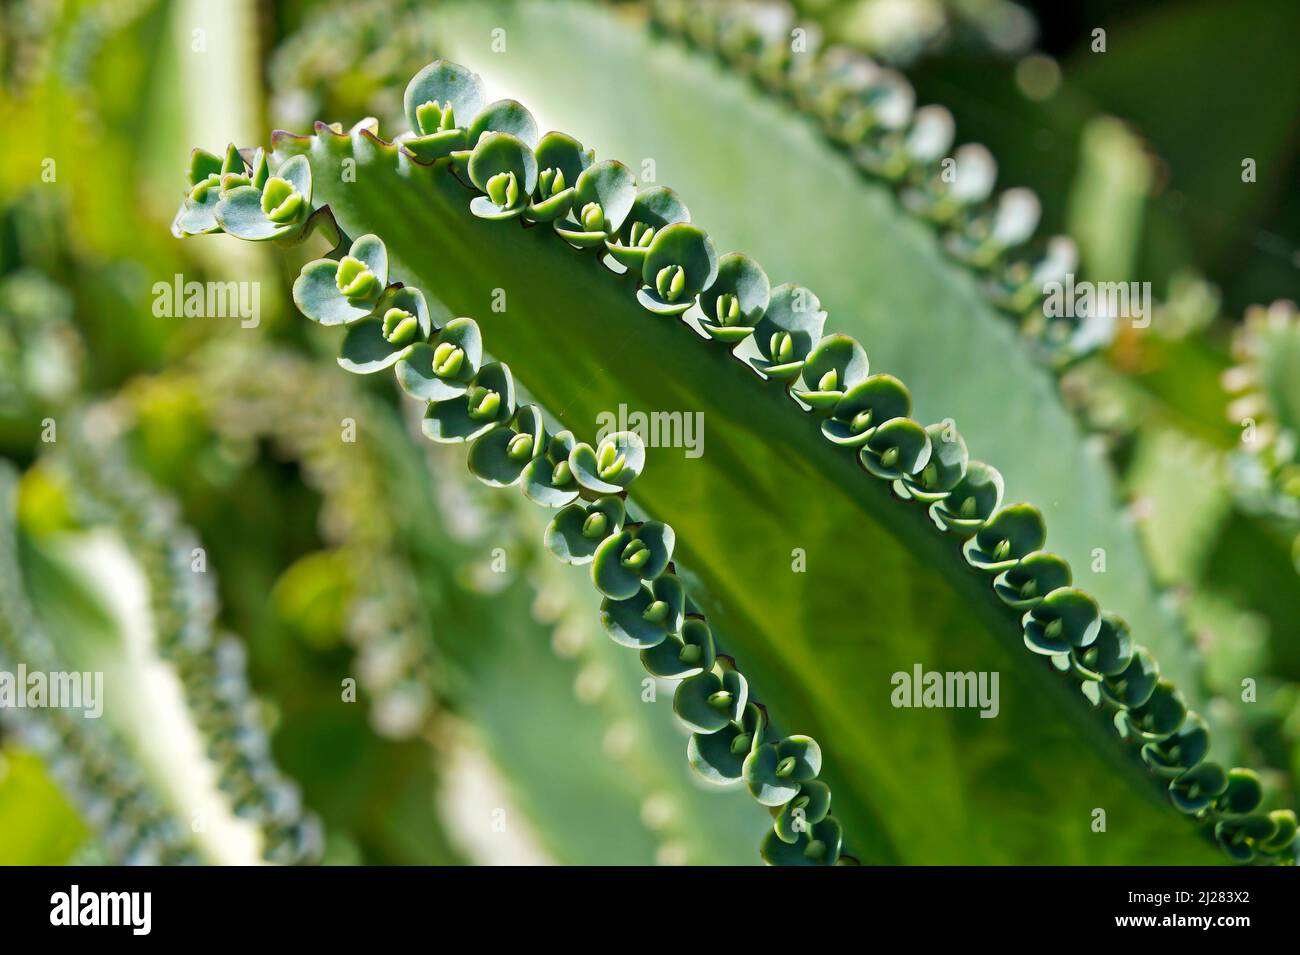 Devil’s backbone, Mother of thousands, Alligator plant, or Mexican hat plant (Bryophyllum daigremontianum) Stock Photo